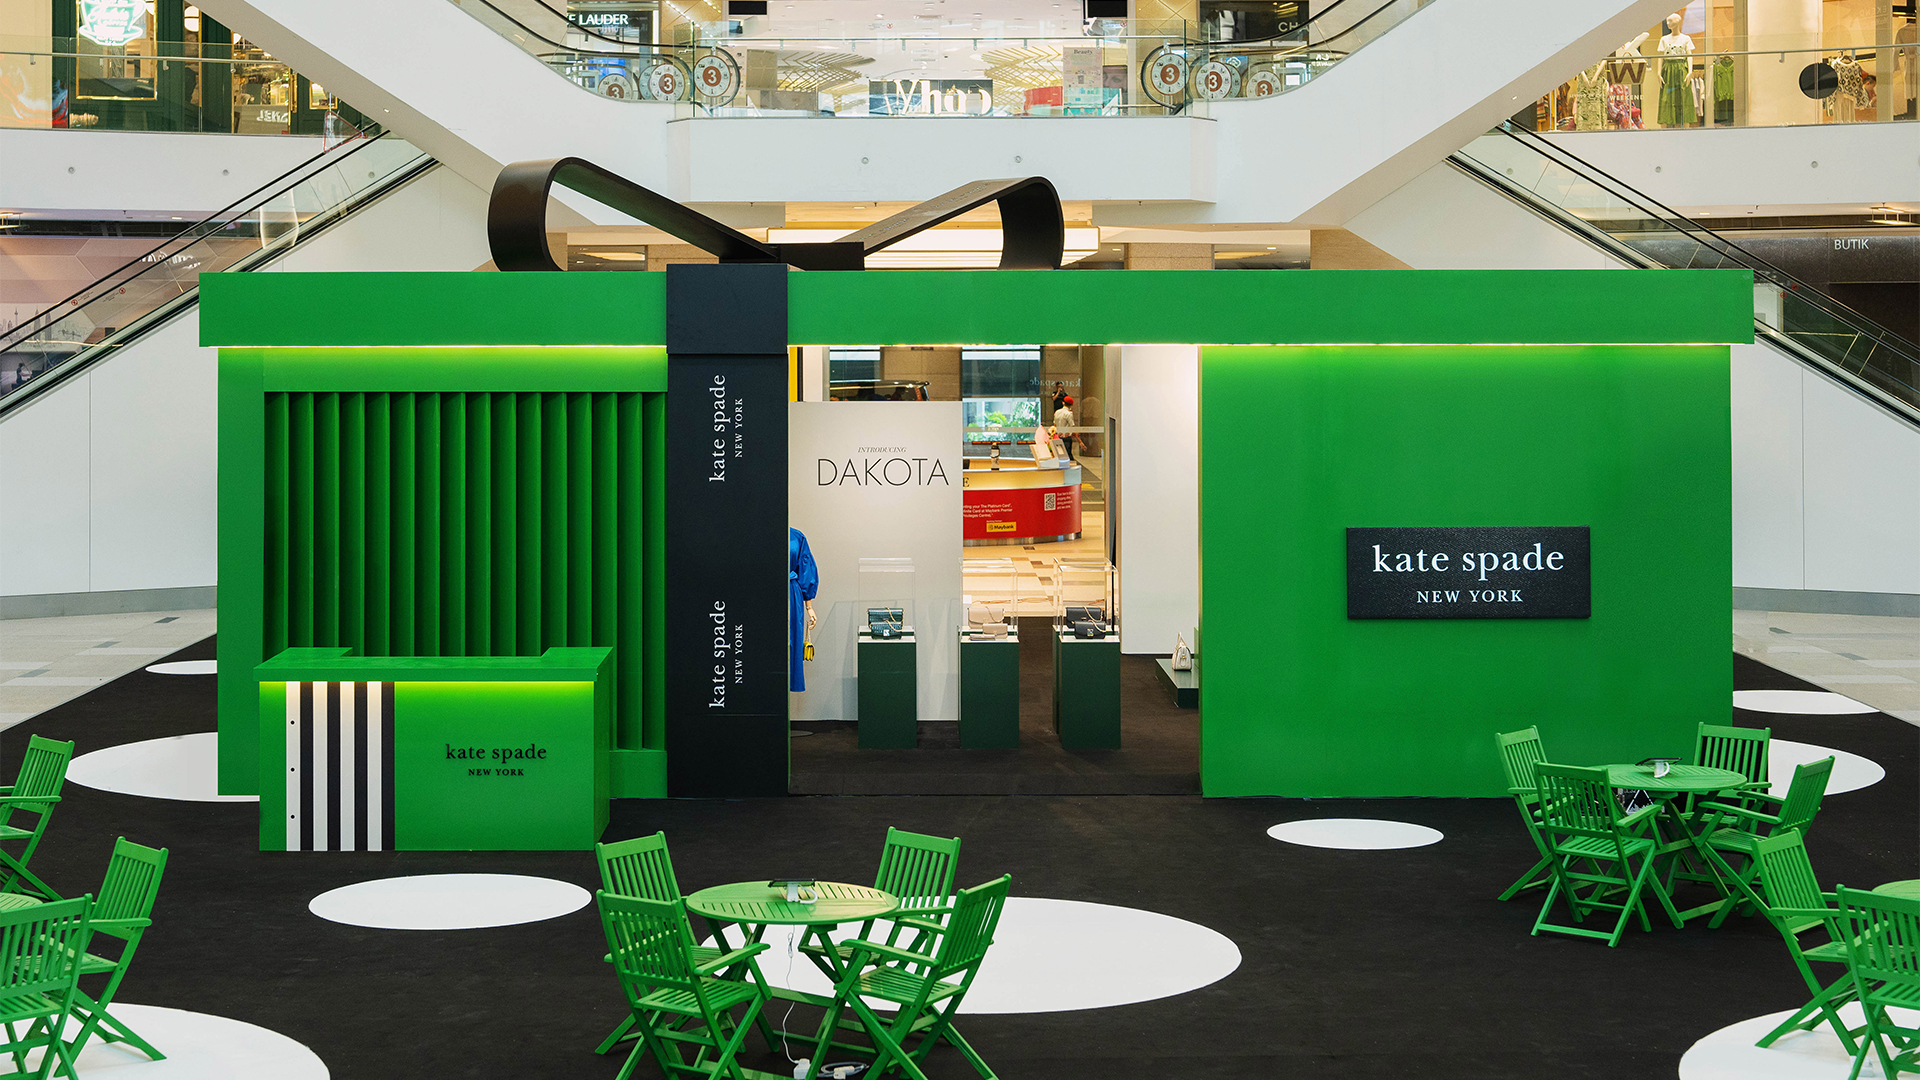 BURO Spotlights: Kate Spade New York’s immersive green pop-up in Kuala Lumpur